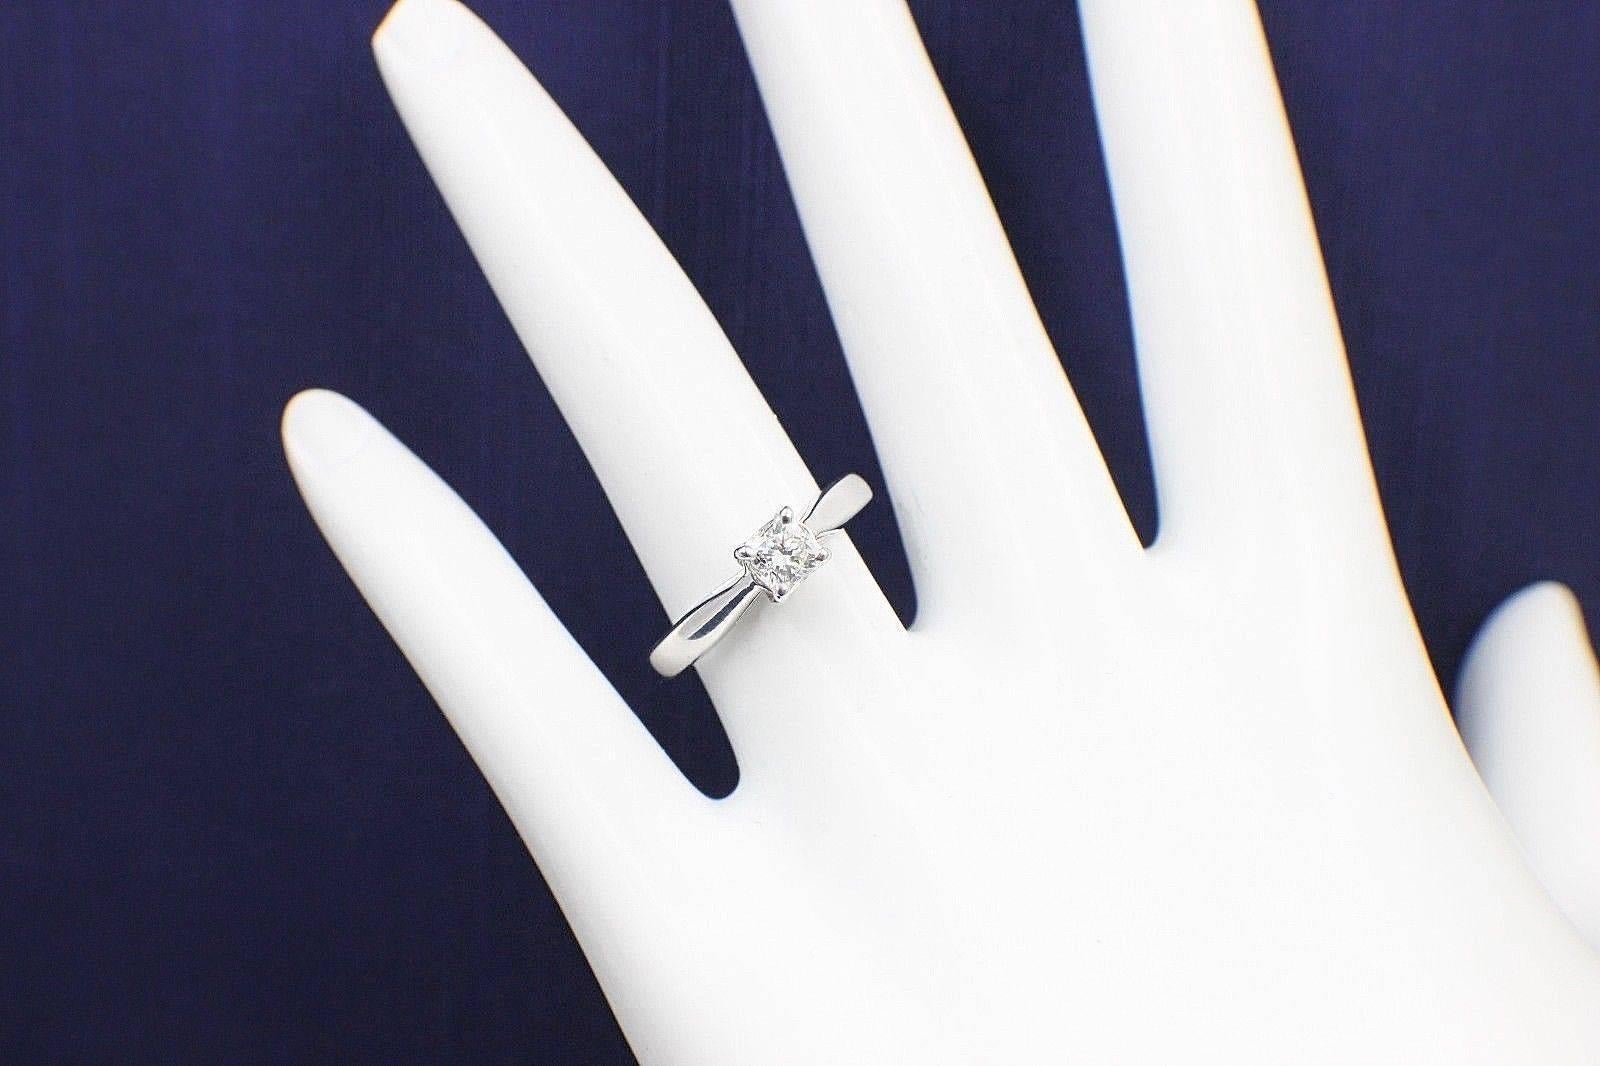 Princess Cut Hearts on Fire Dream Cut 0.44 Carat Diamond Ring in 14 Karat White Gold For Sale